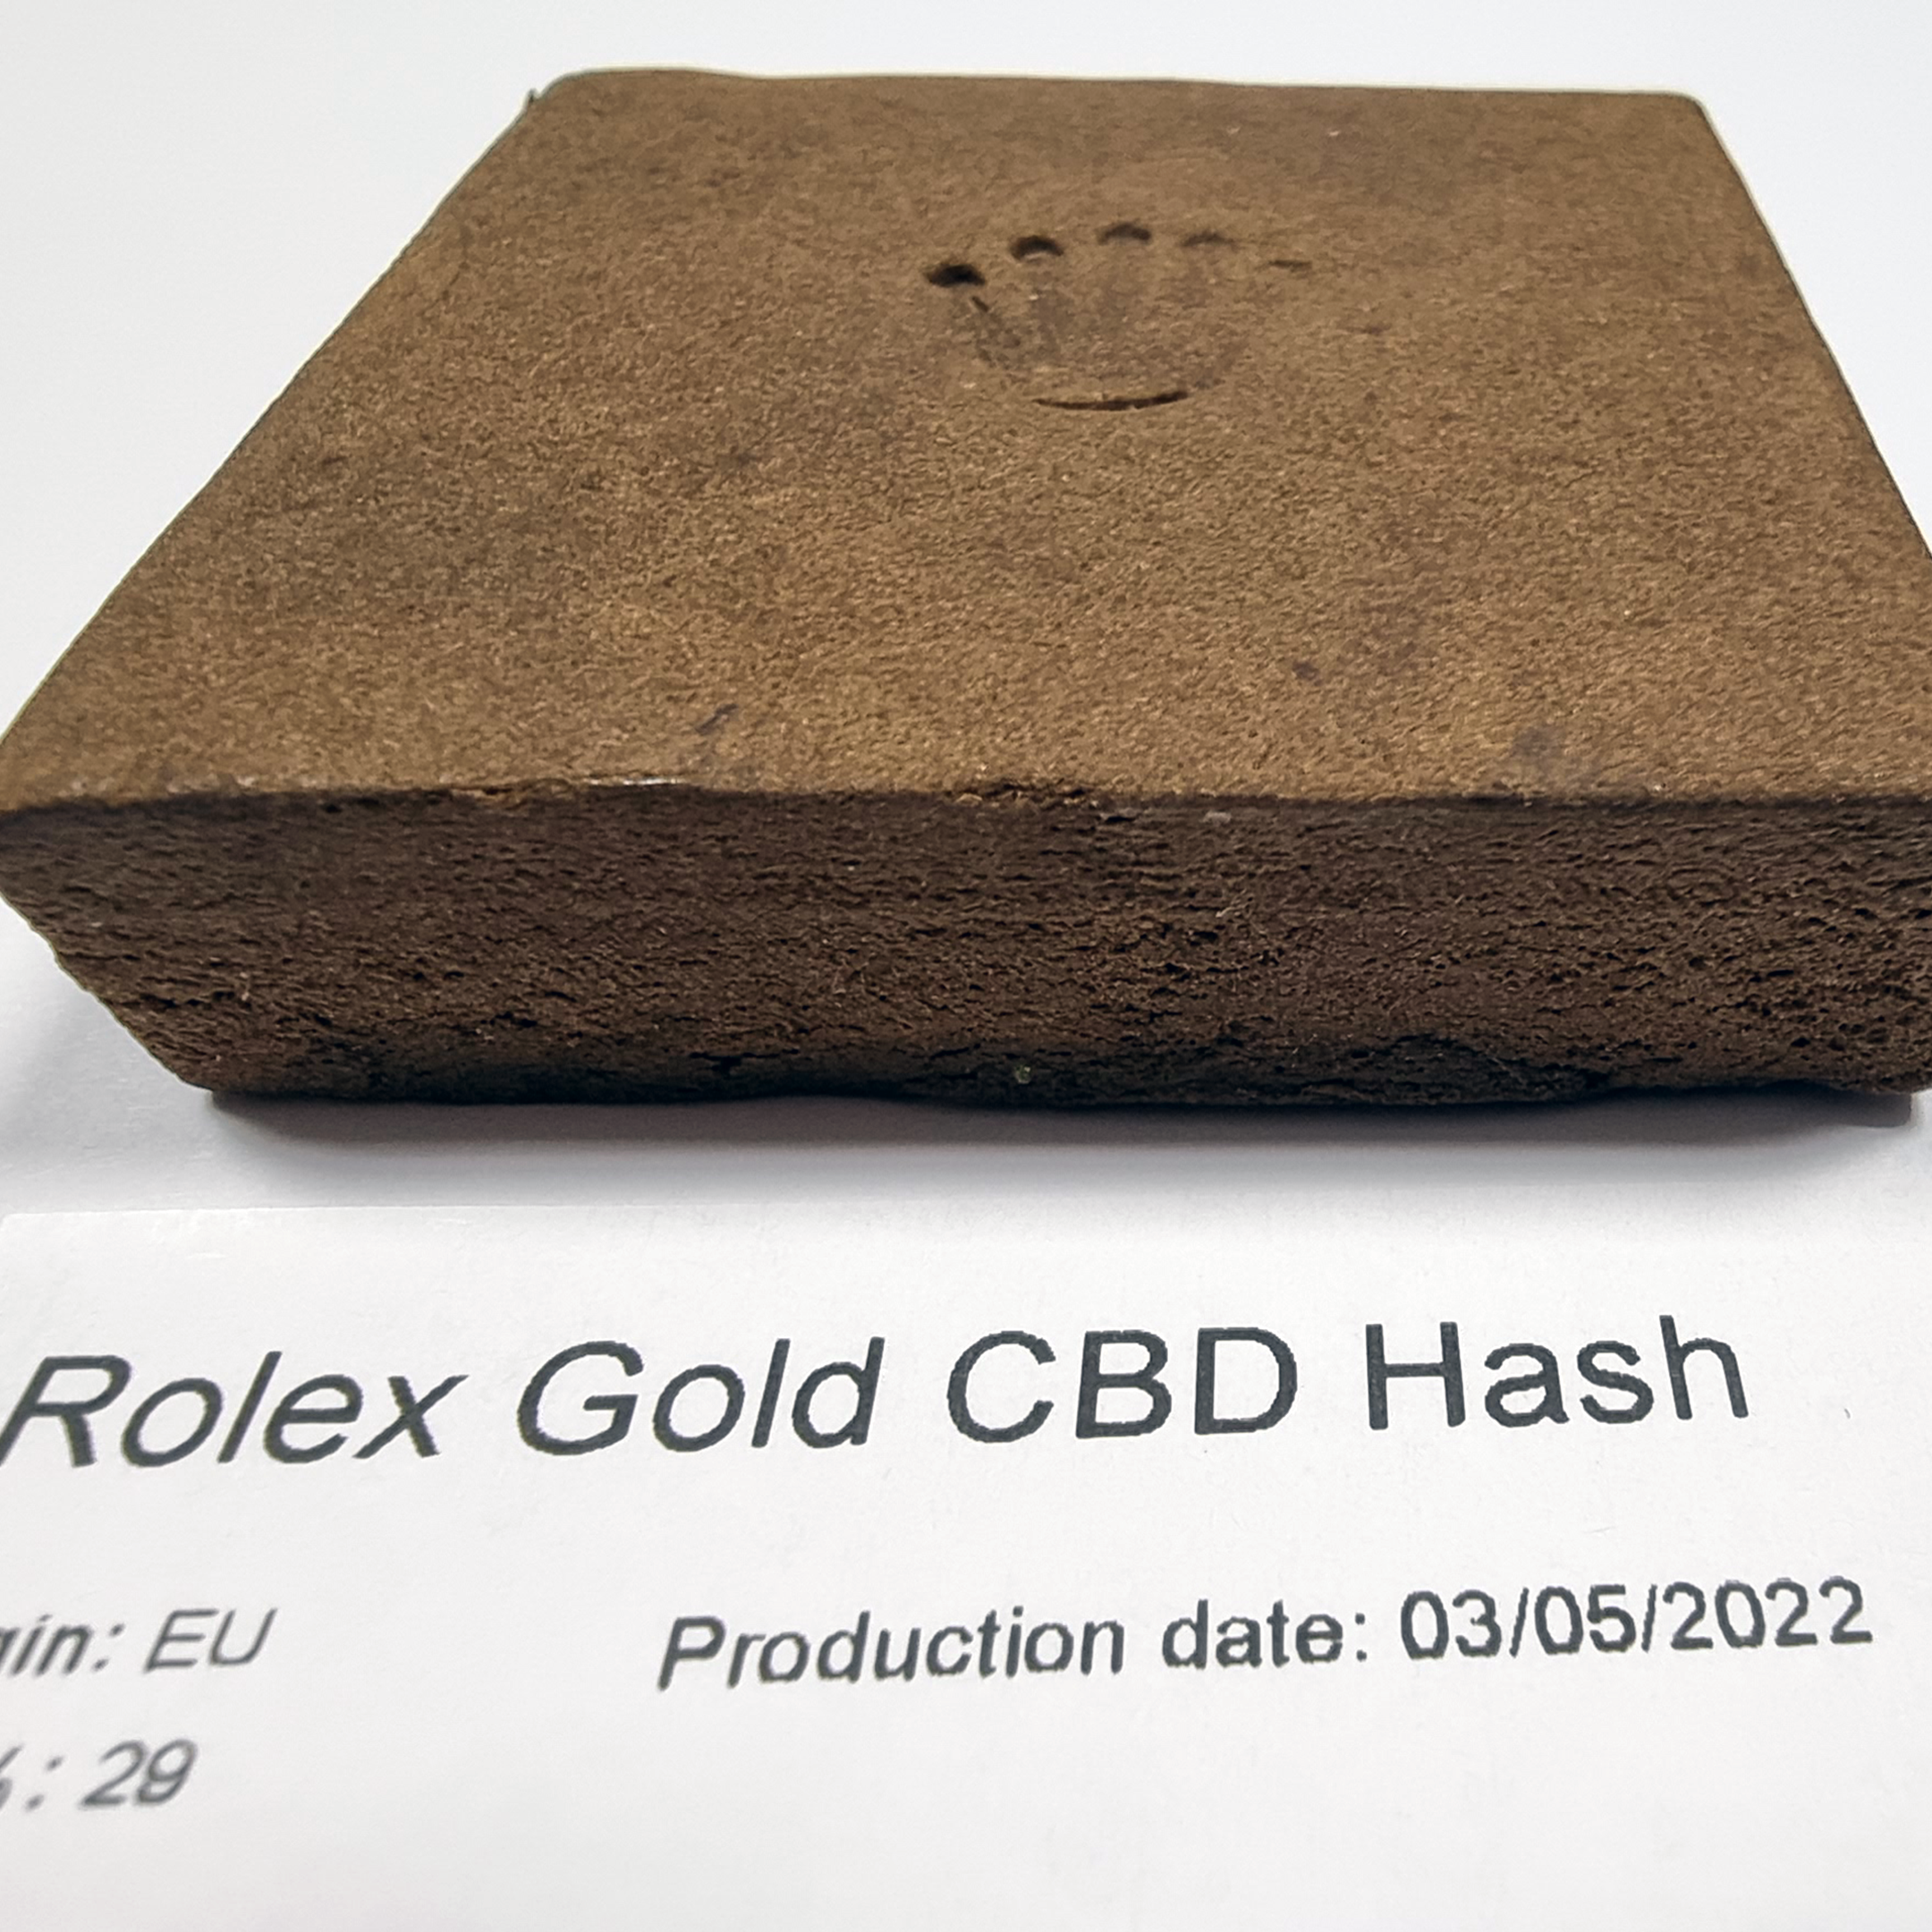 Rolex Gold 29% CBD Hash